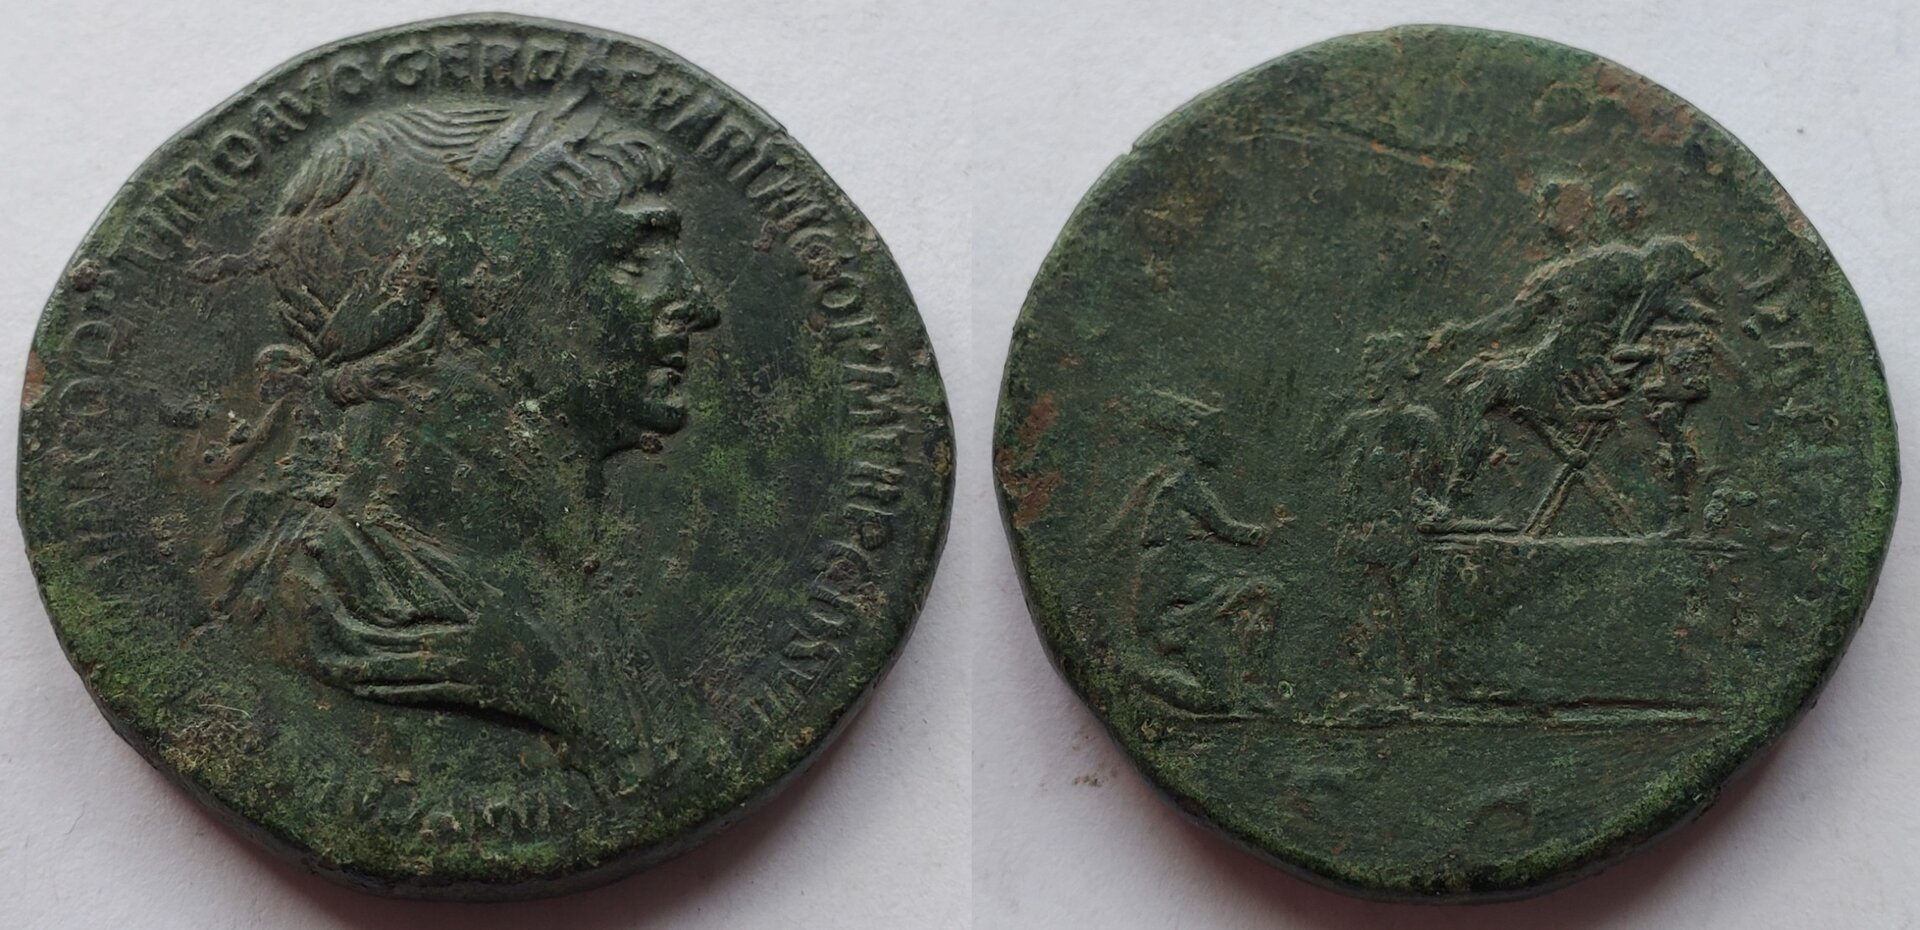 Trajan AE Sestertius REX PARTHIS DATIS Presenting Parthamaspates to kneeling Parthia.jpg